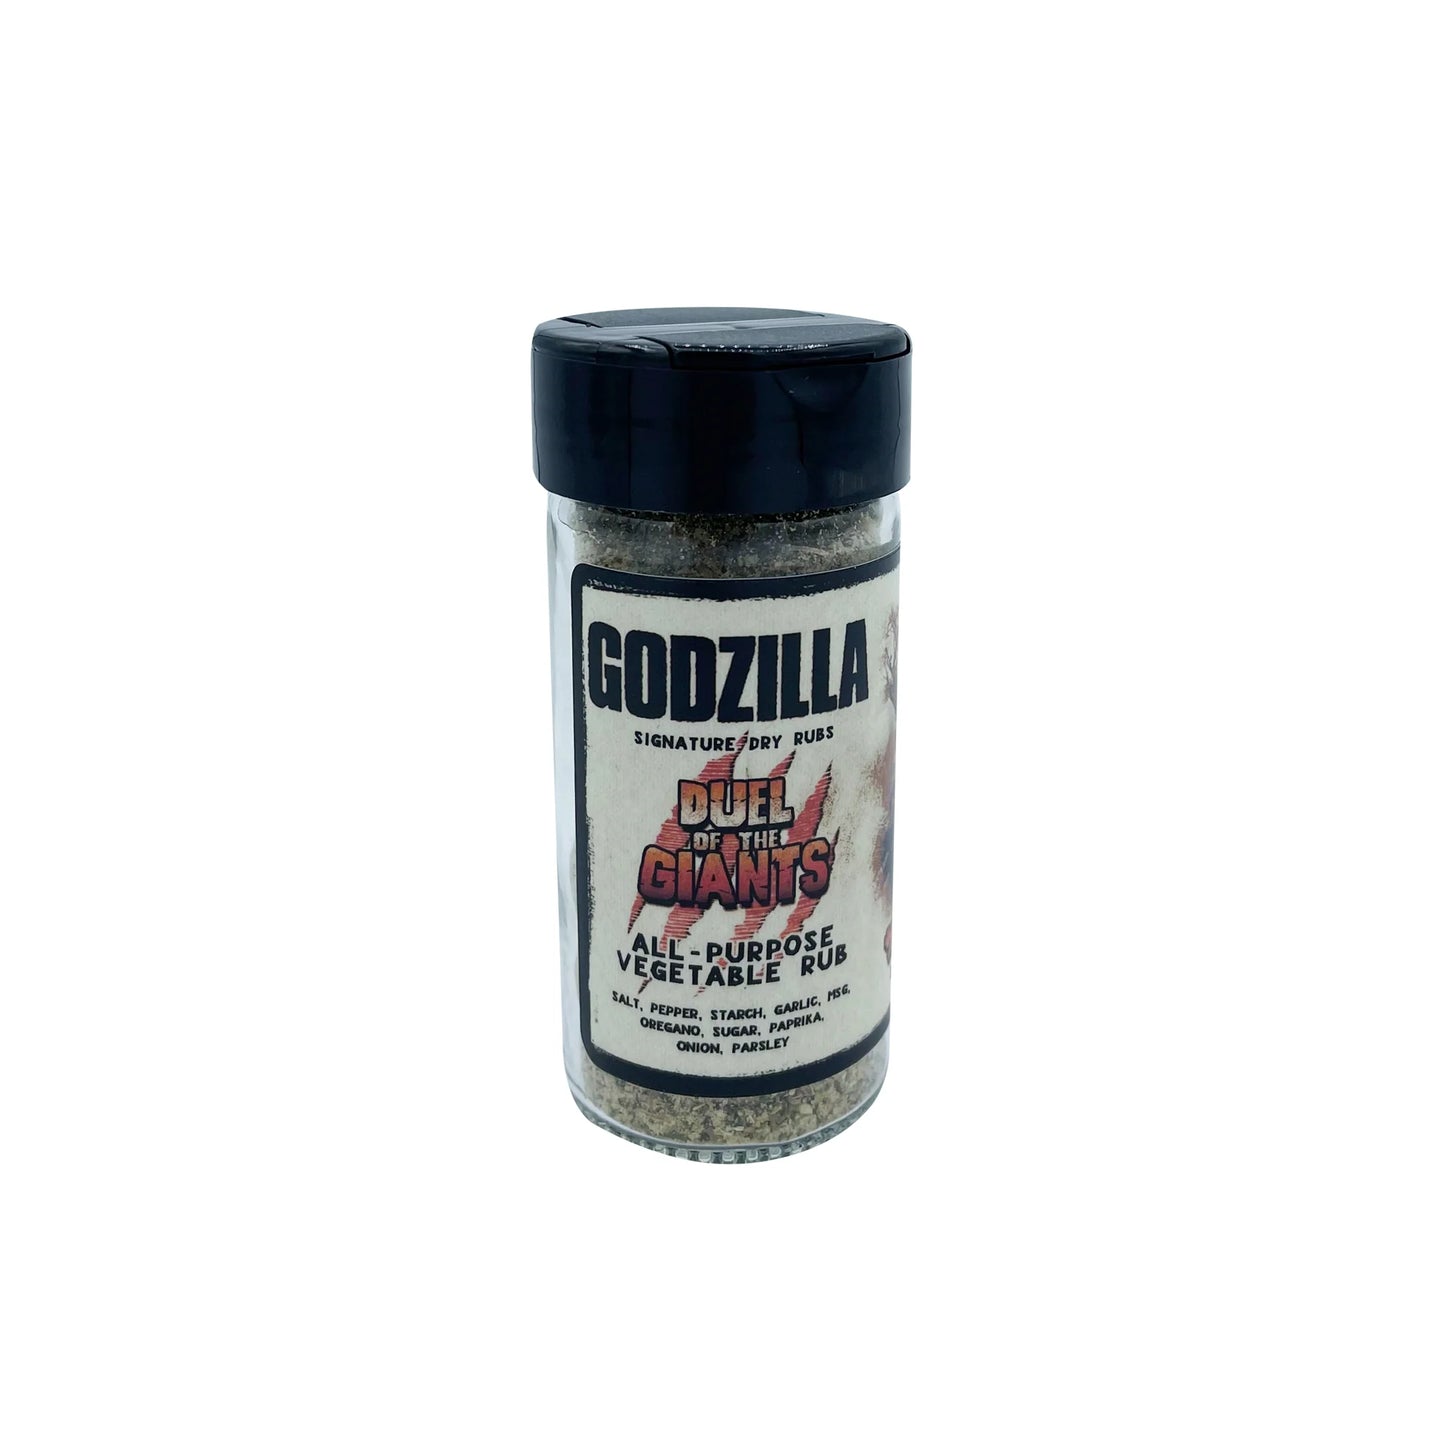 Godzilla Dry Rub Master Set